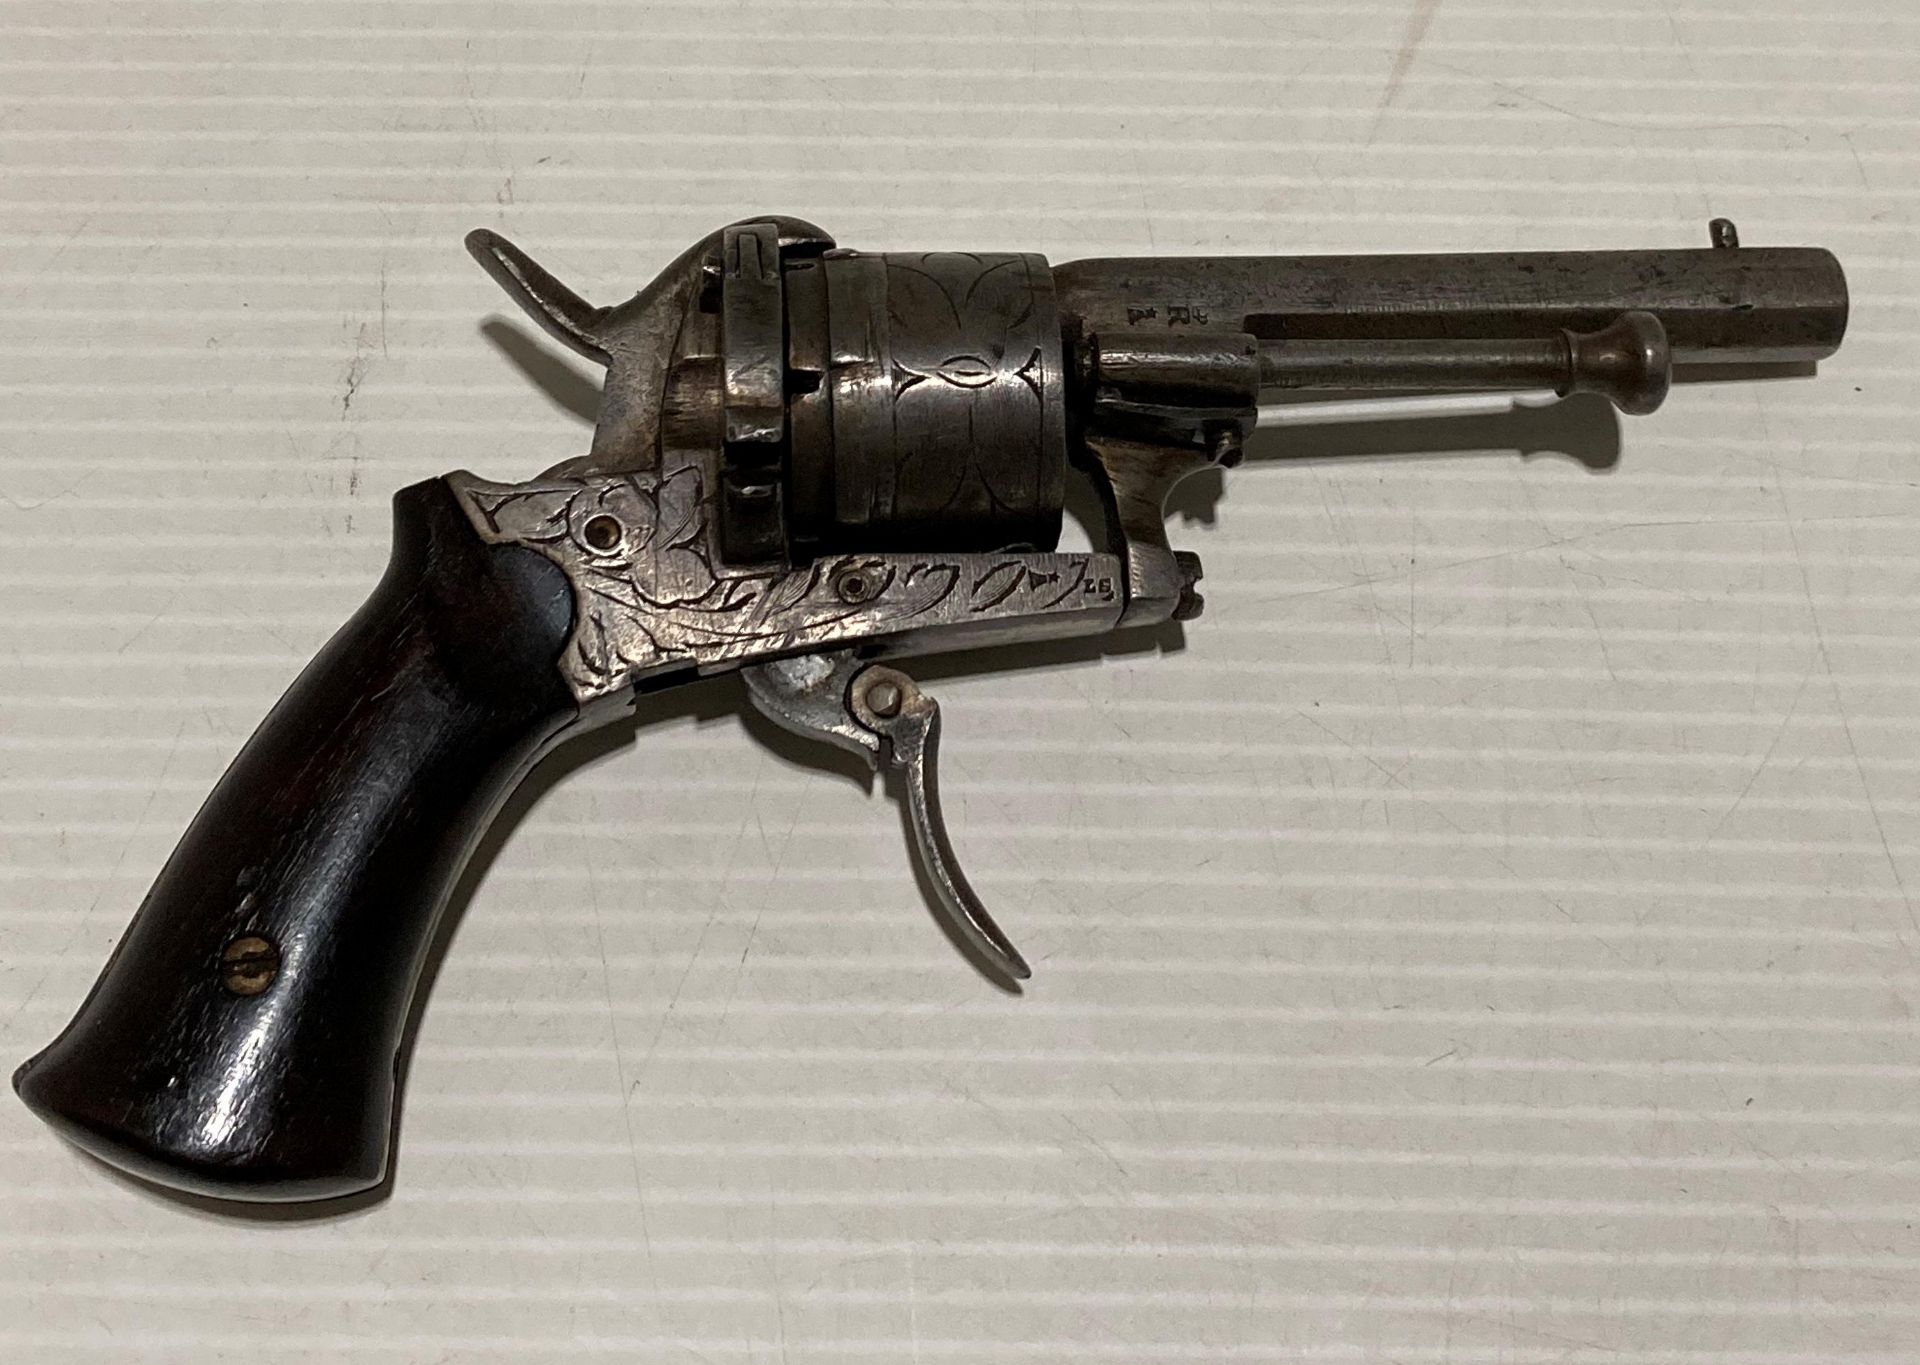 An antique six shot 7mm calibre circa 19th Century revolver with foldable/retractable trigger